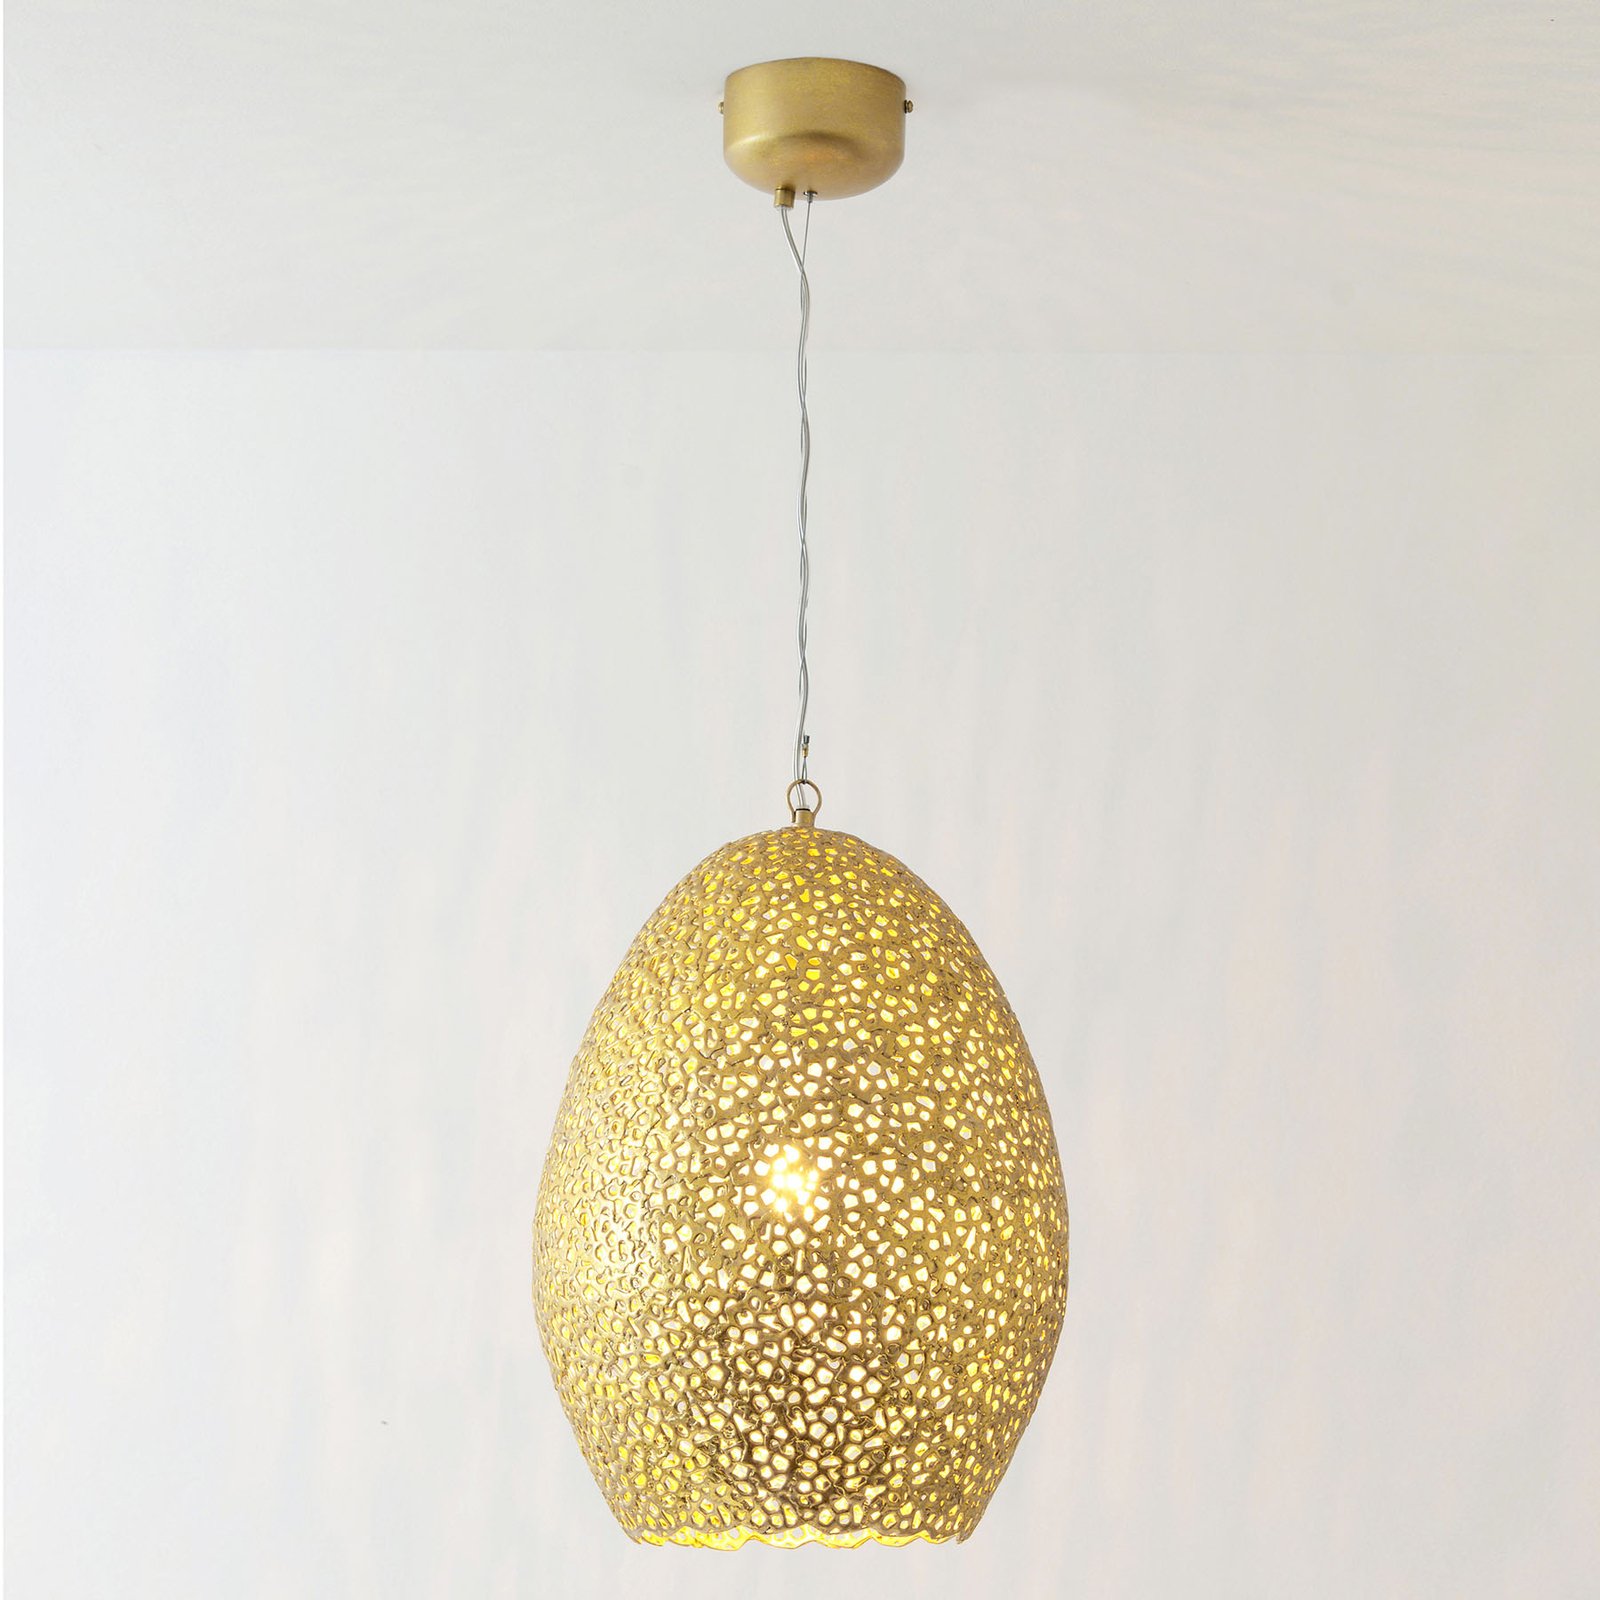 Cavalliere pendant light, gold, Ø 34 cm